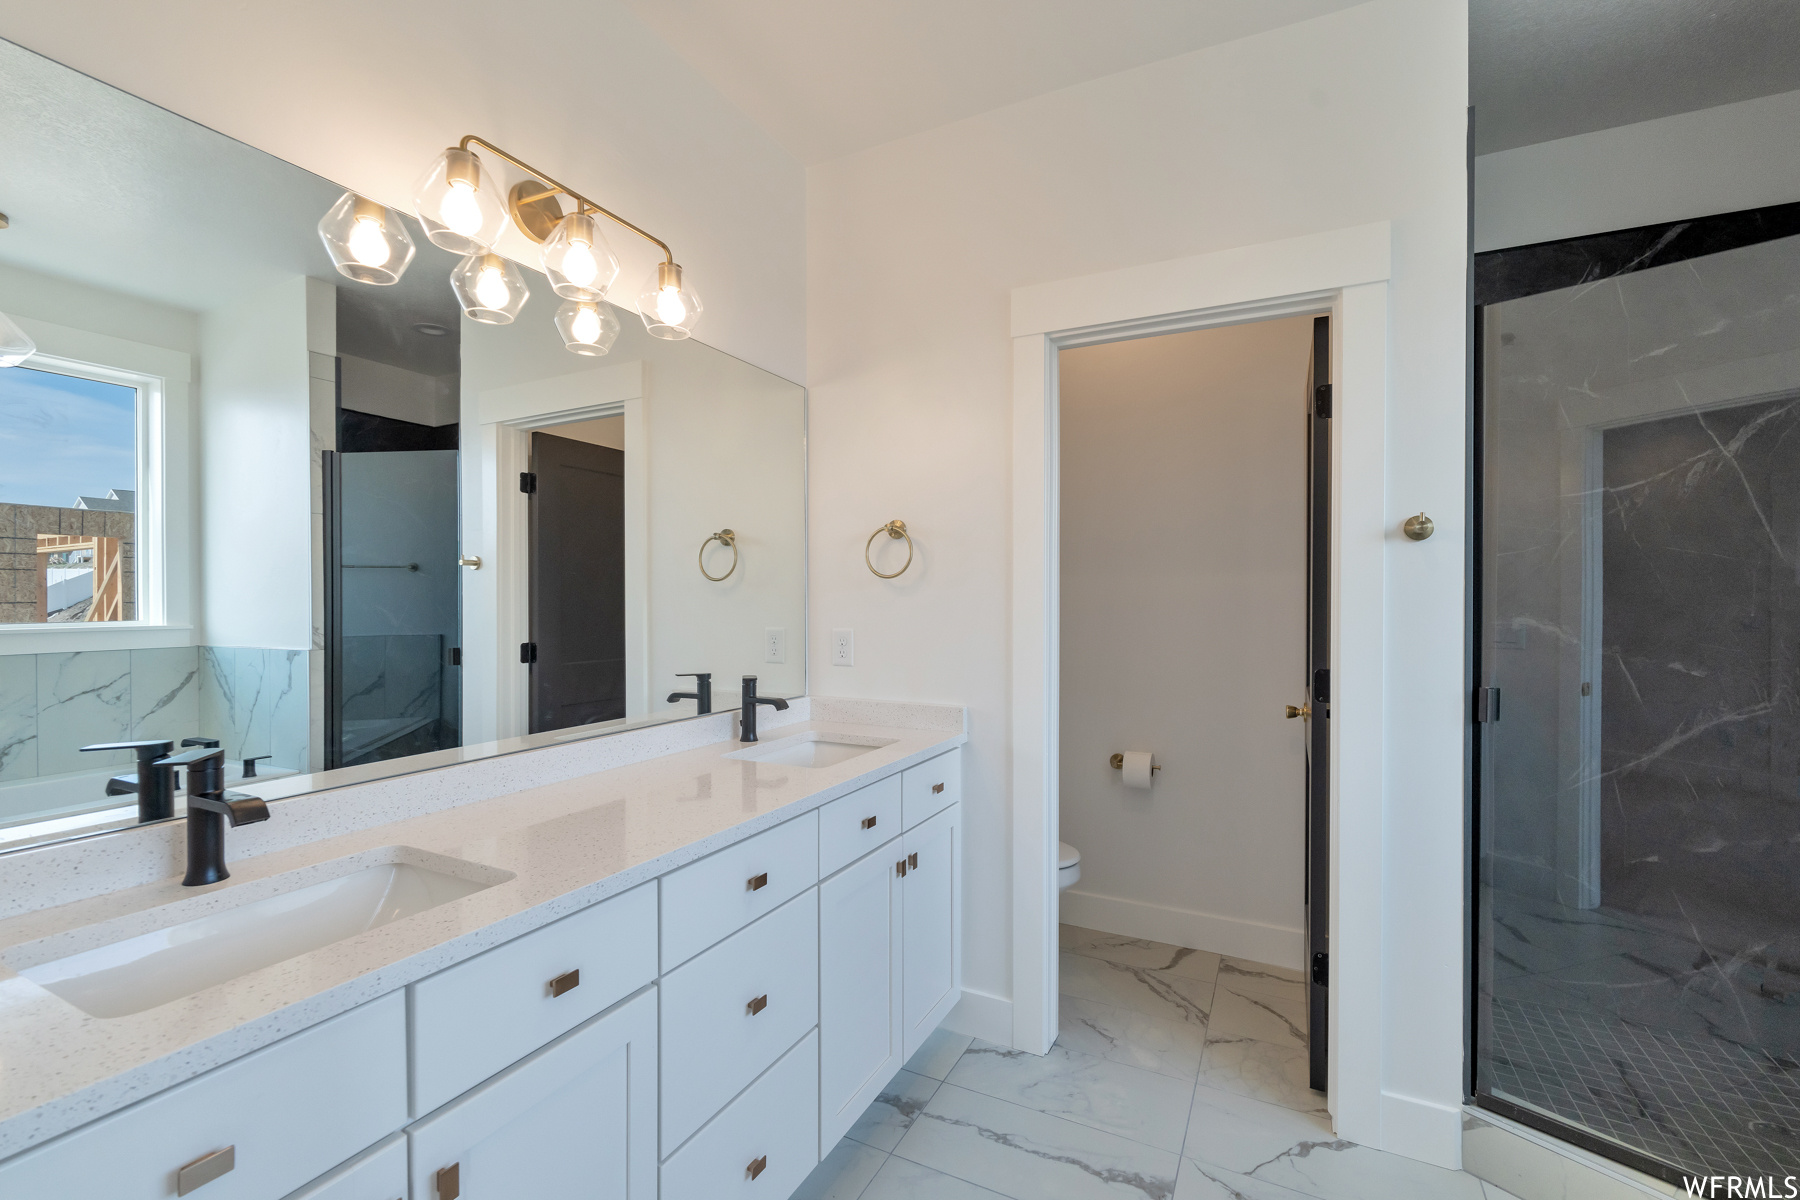 Full bathroom featuring tile floors, toilet, mirror, enclosed shower, and dual vanity